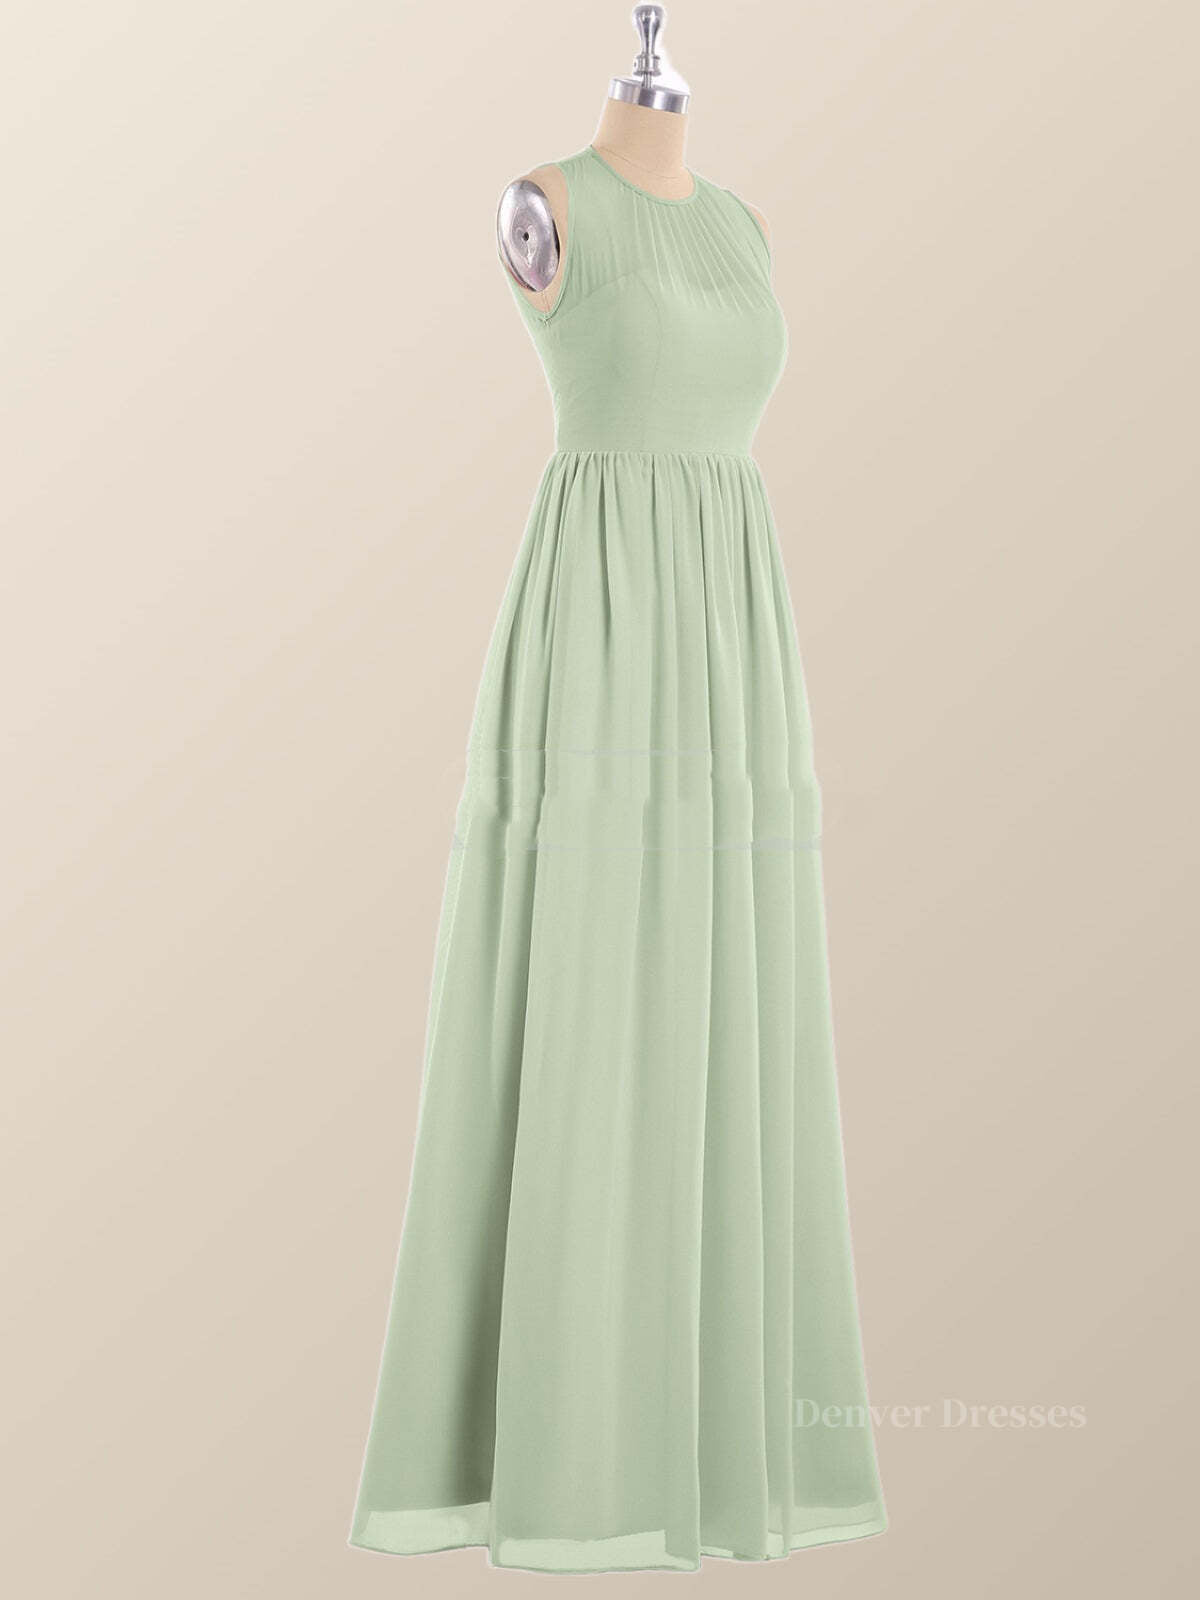 Bridesmaid Dresses With Sleeve, Jewel Neck Sage Green Chiffon Long Bridesmaid Dress